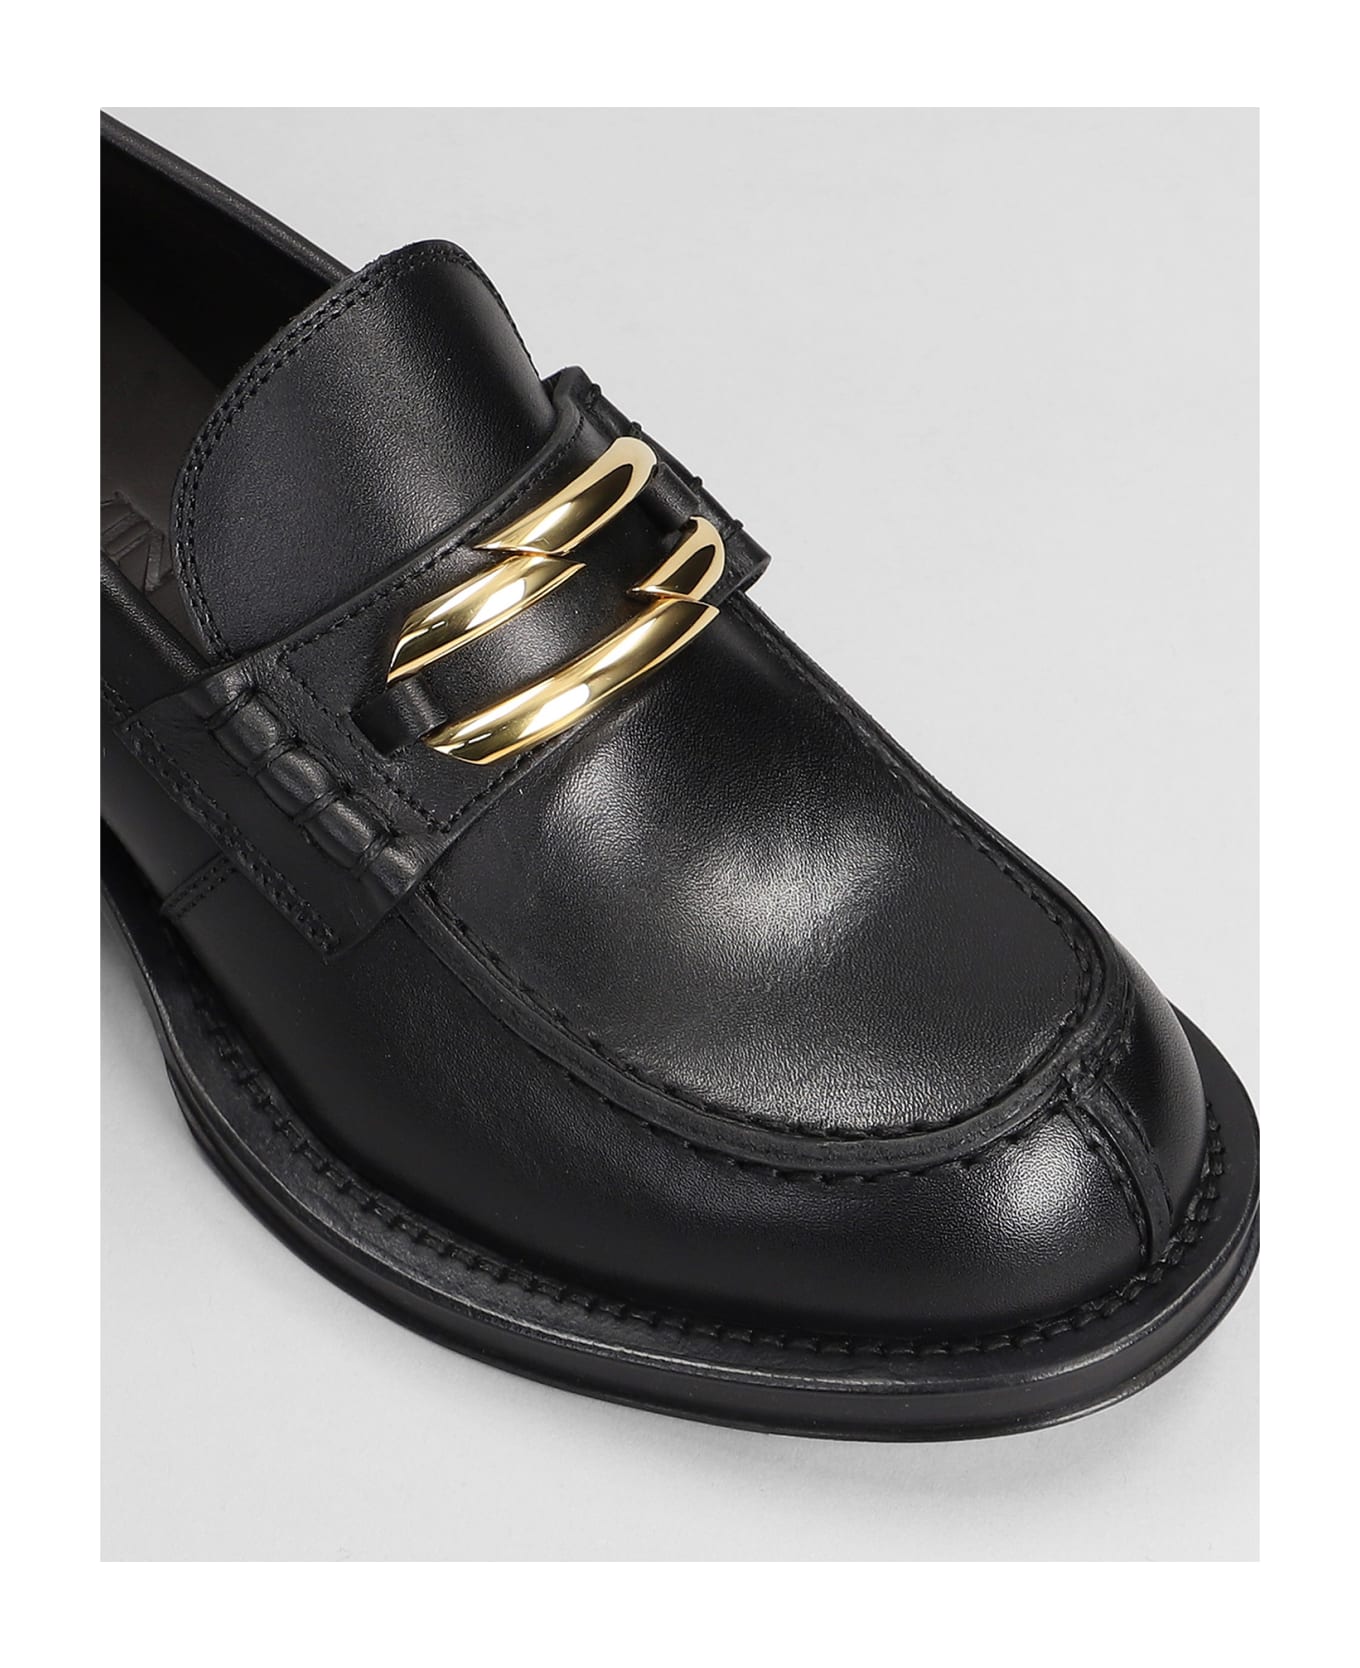 Lanvin Loafers In Black Leather - Black